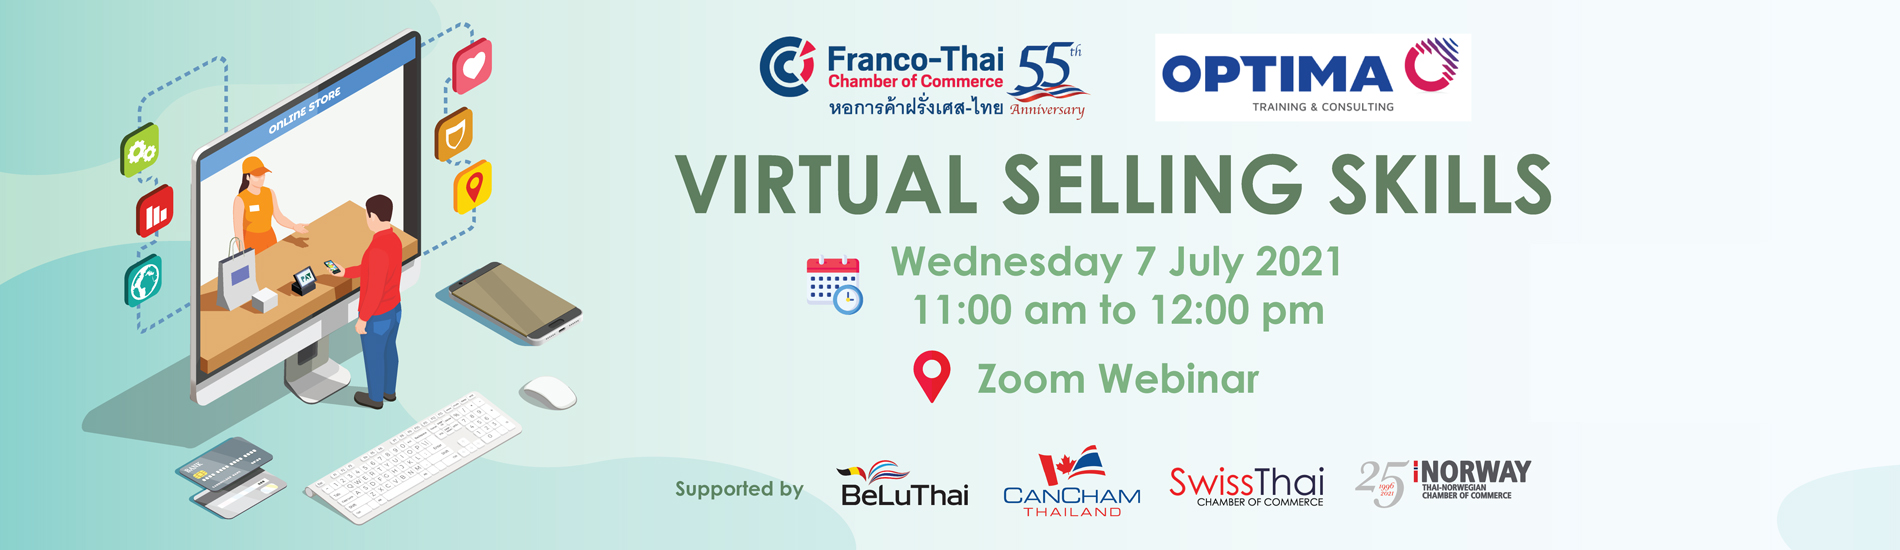 Virtual Selling Skills Webinar